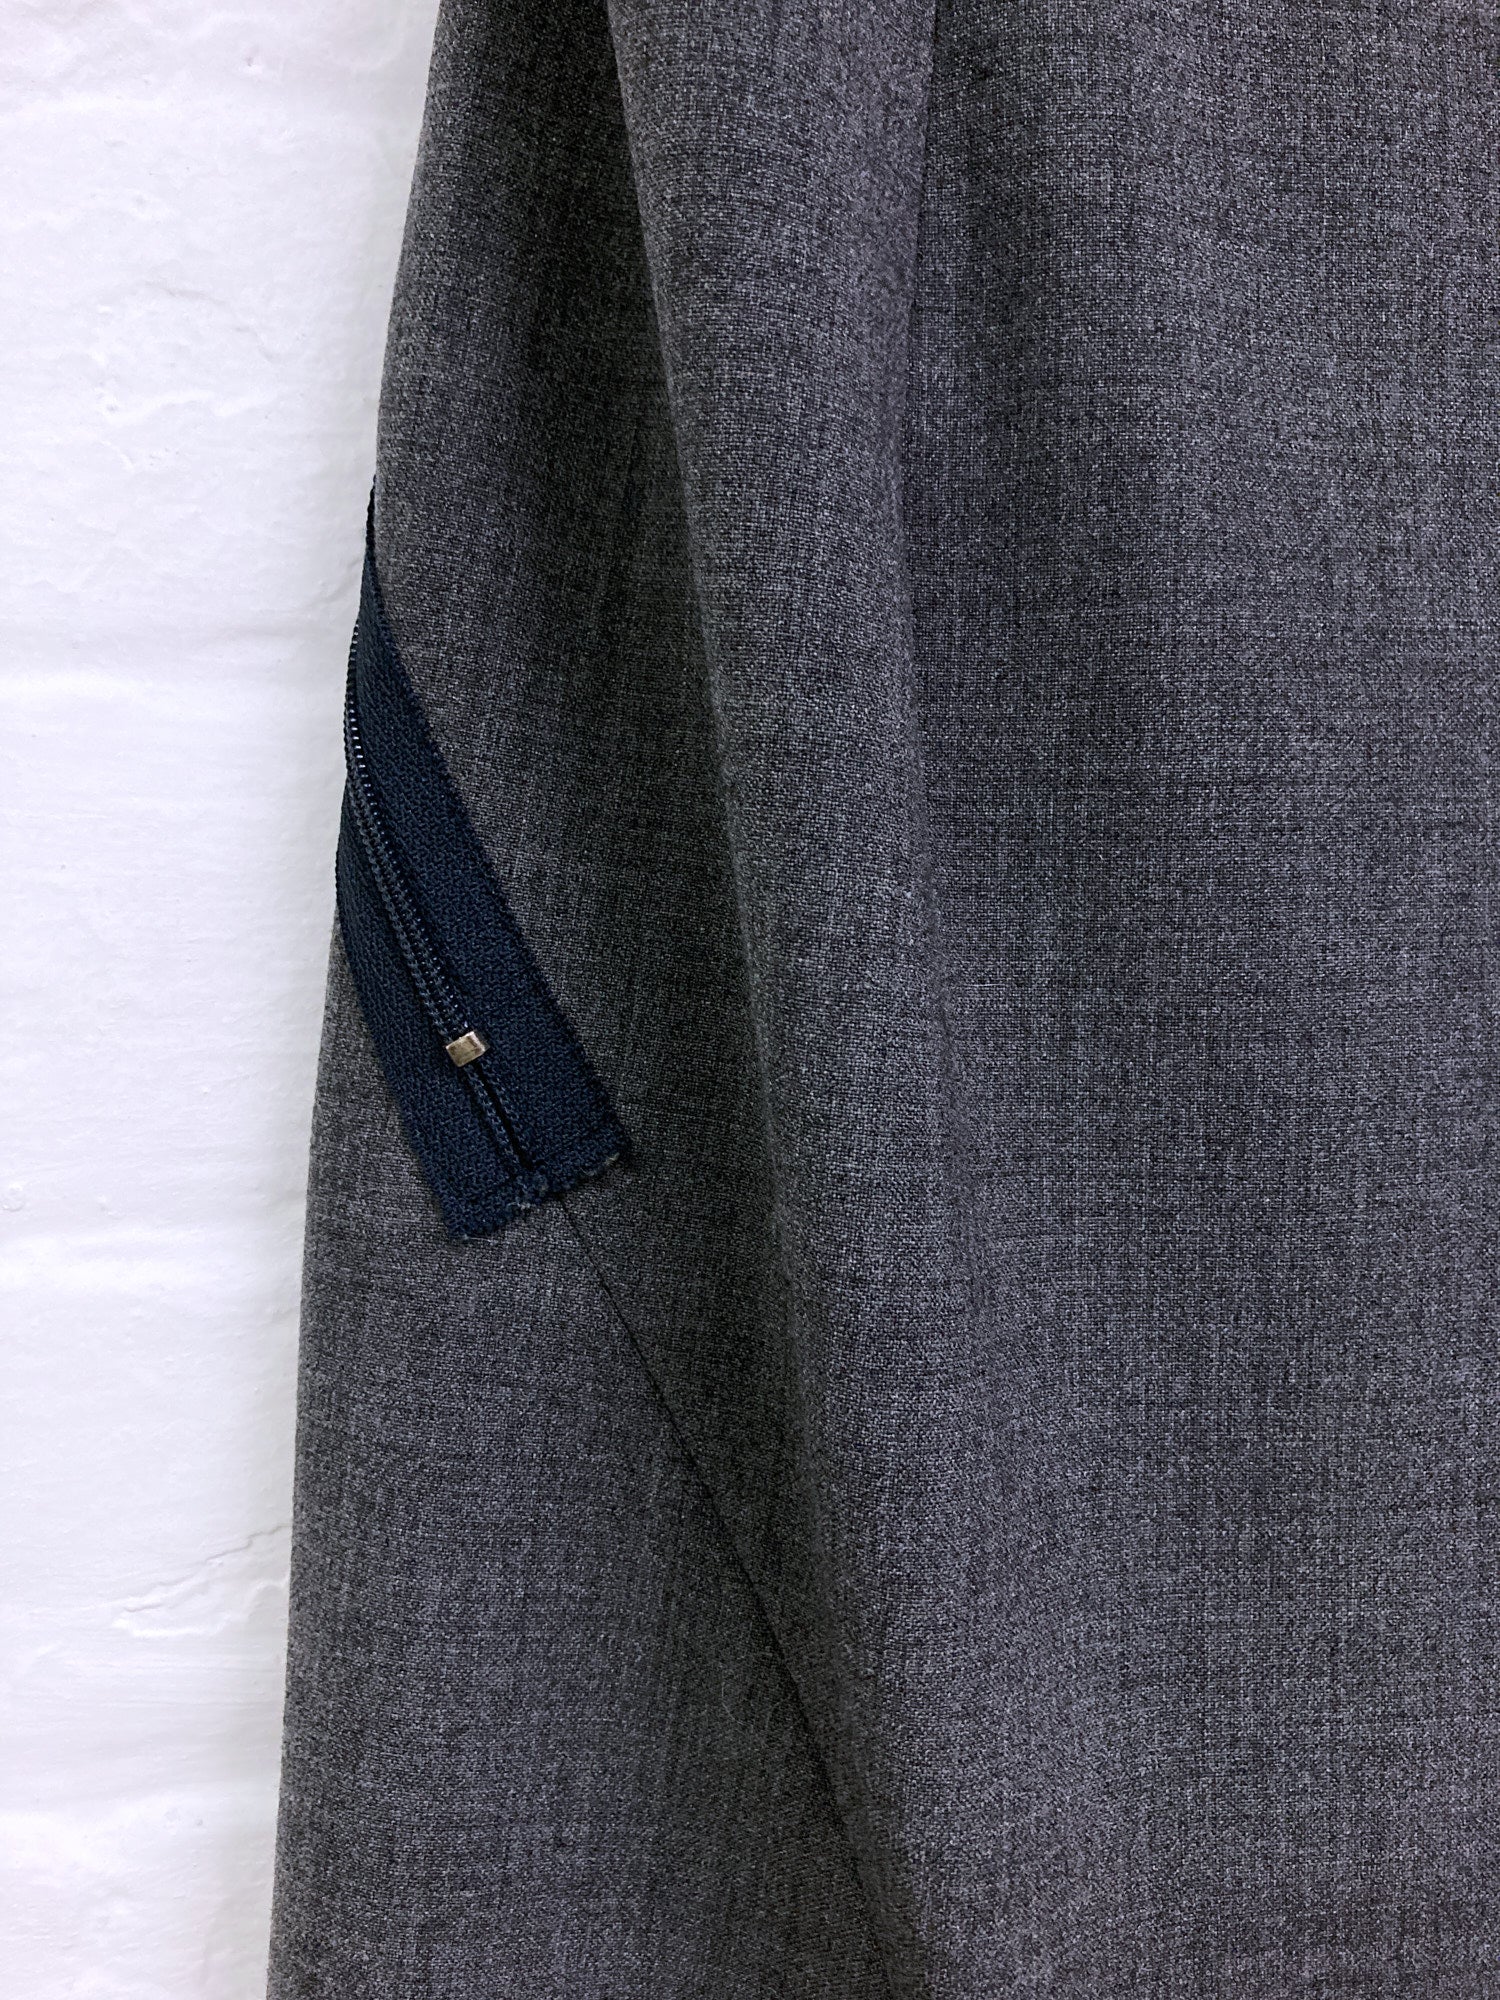 Jean Colonna grey stretch wool strapless dress with angled zip - sz 42